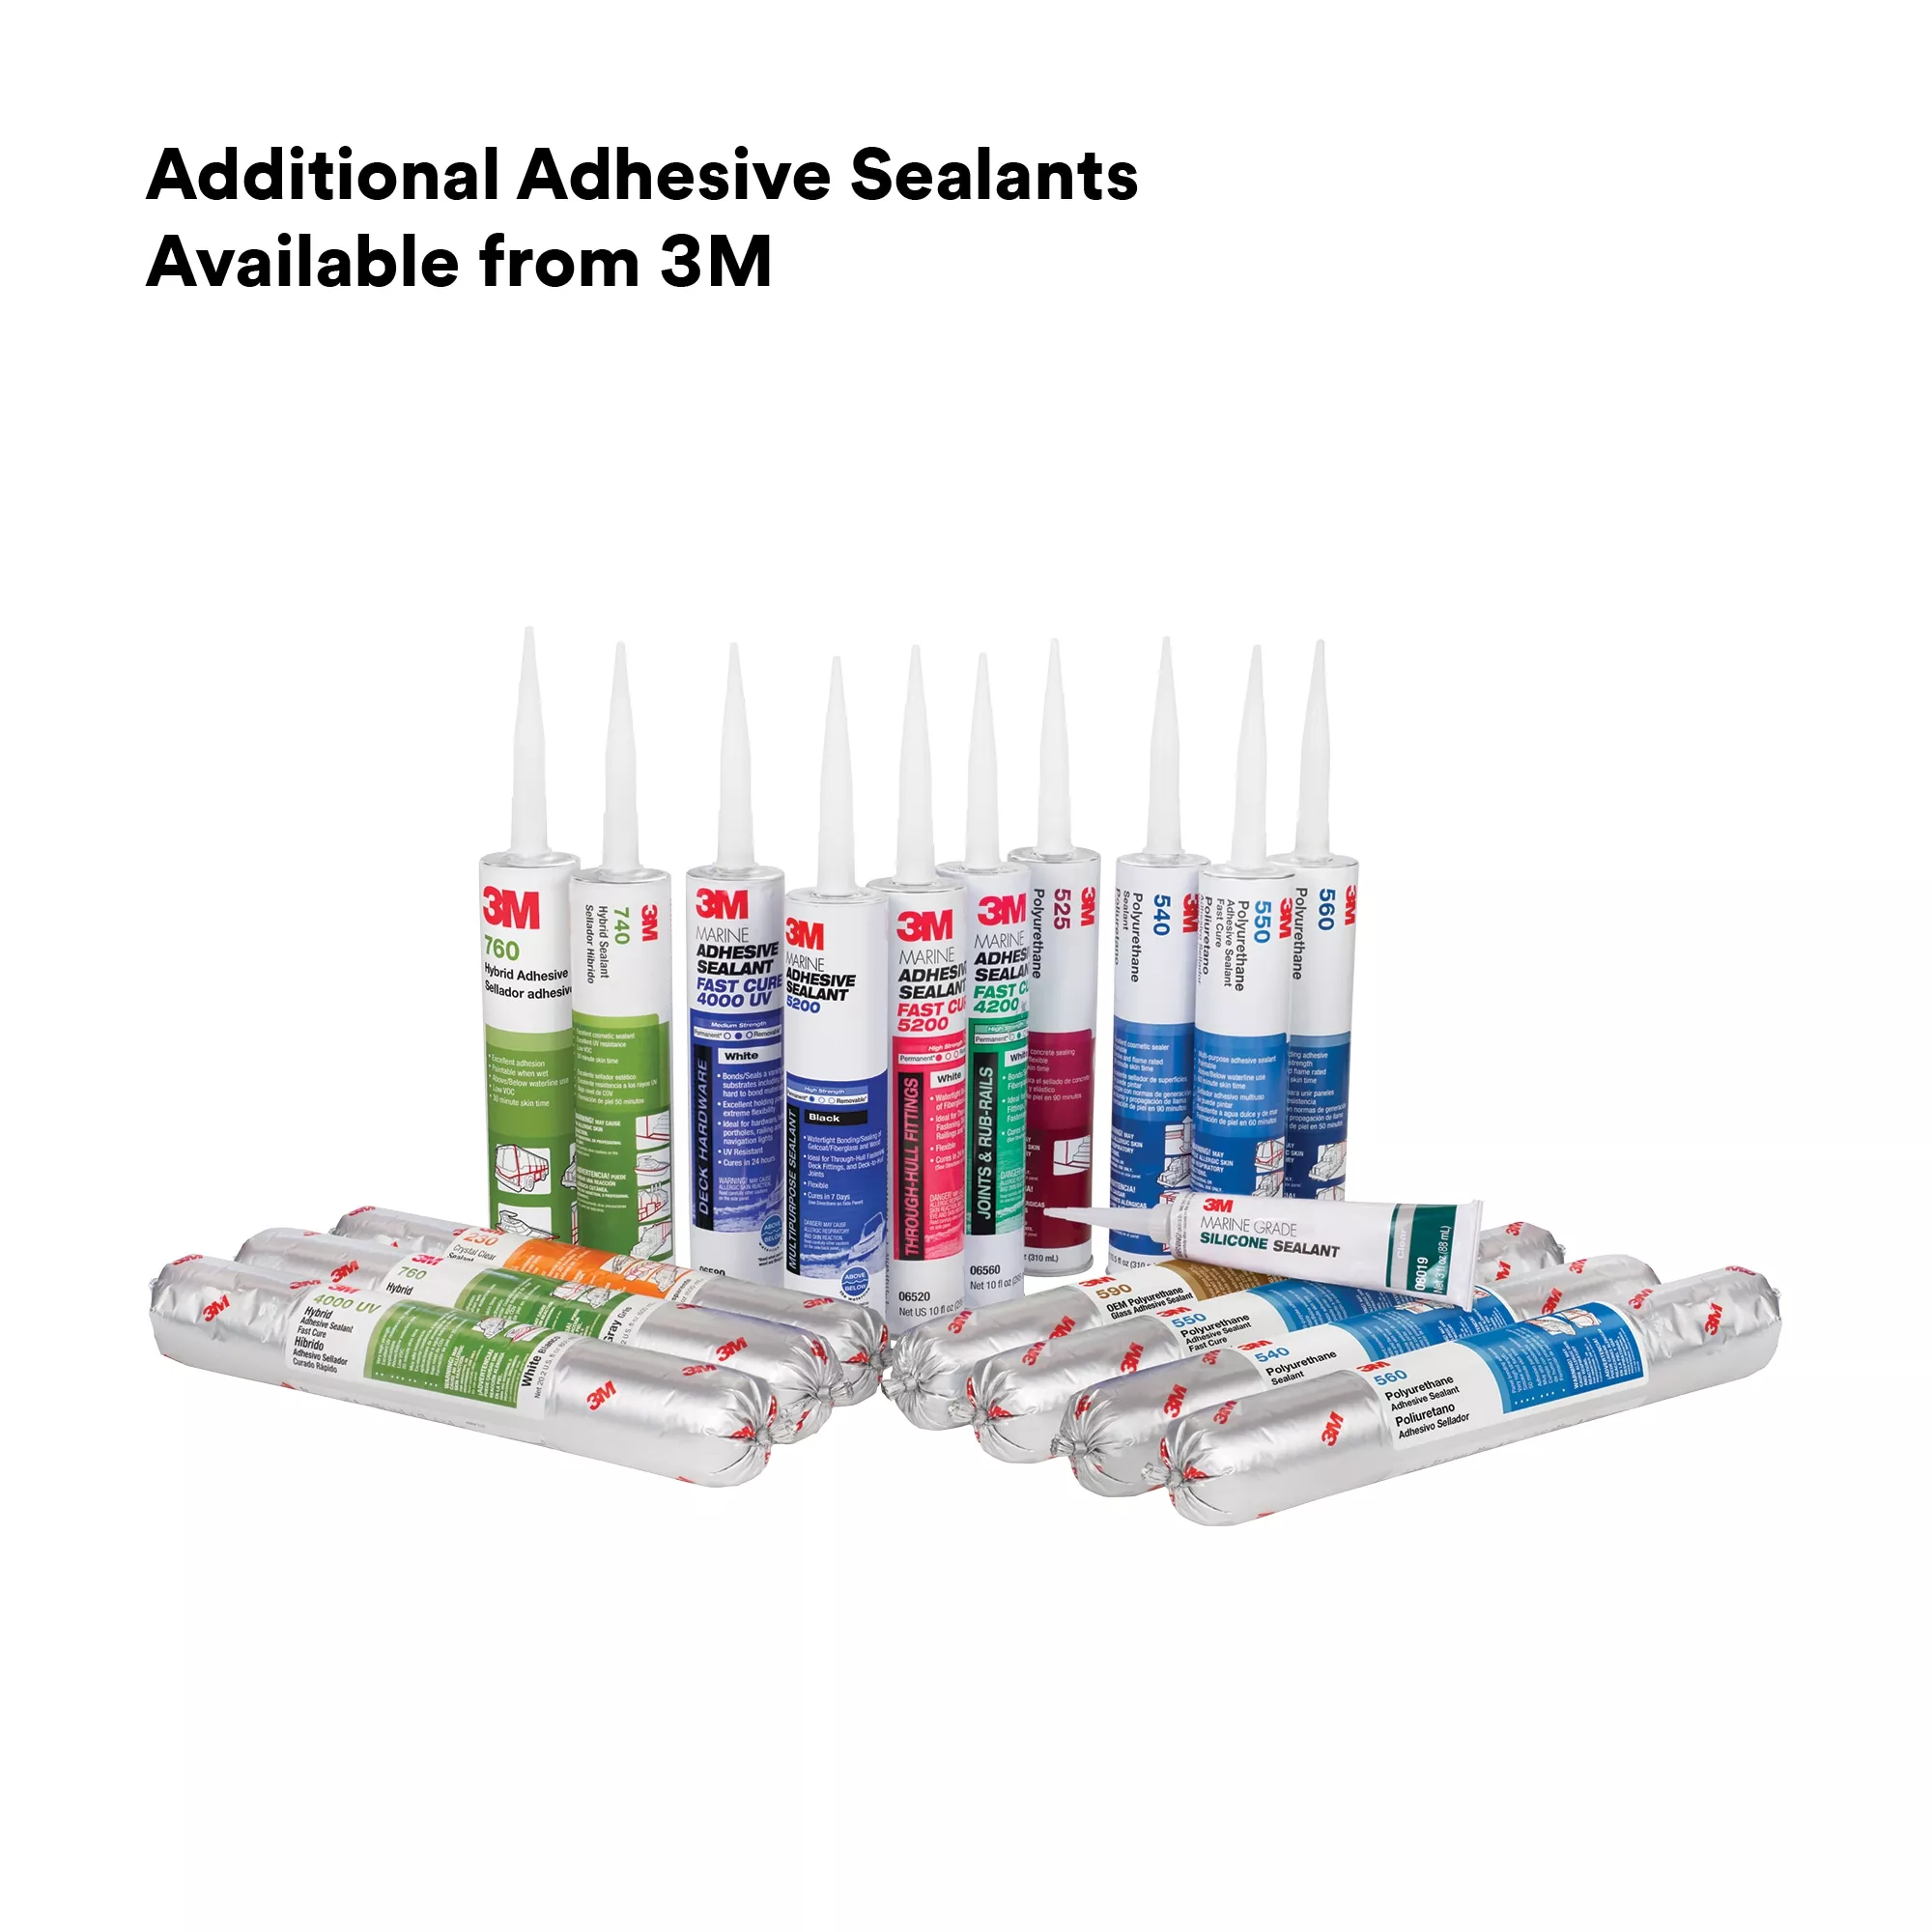 SKU 7100197999 | 3M™ Polyurethane Adhesive Sealant 550FC Fast Cure